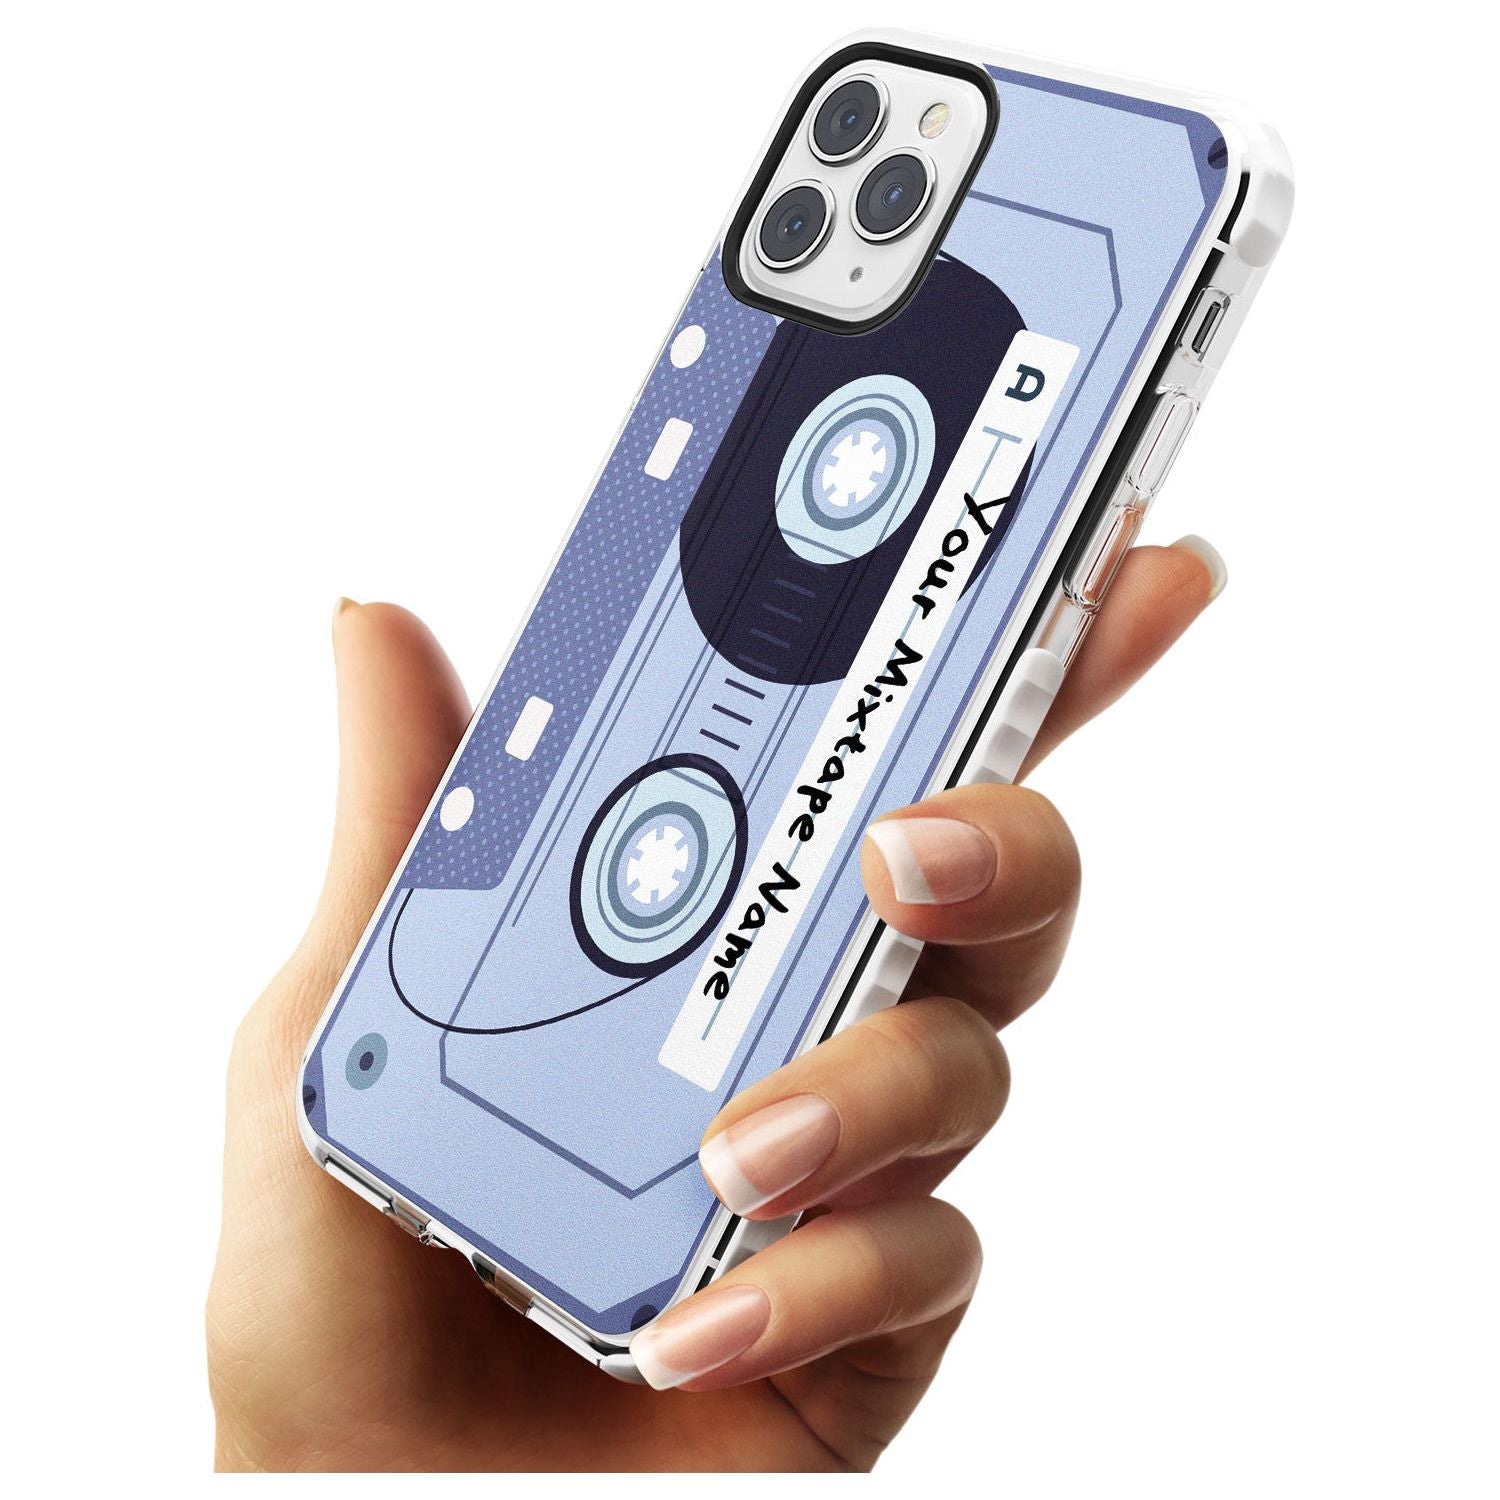 Industrial Mixtape Slim TPU Phone Case for iPhone 11 Pro Max